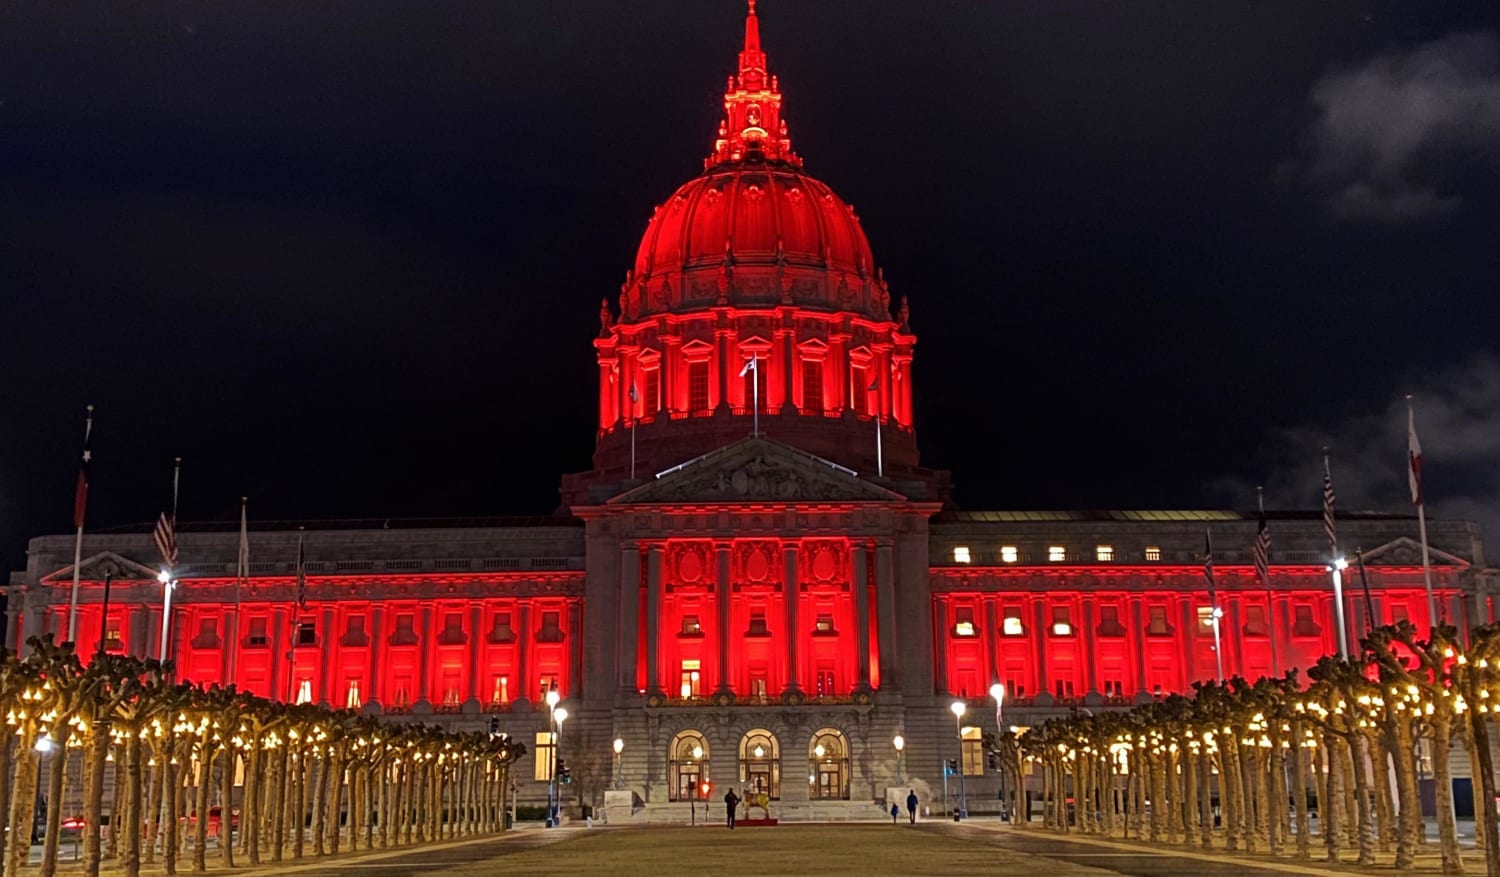 San Francisco City Hall illuminated to honor landing of Perseverance on Mars